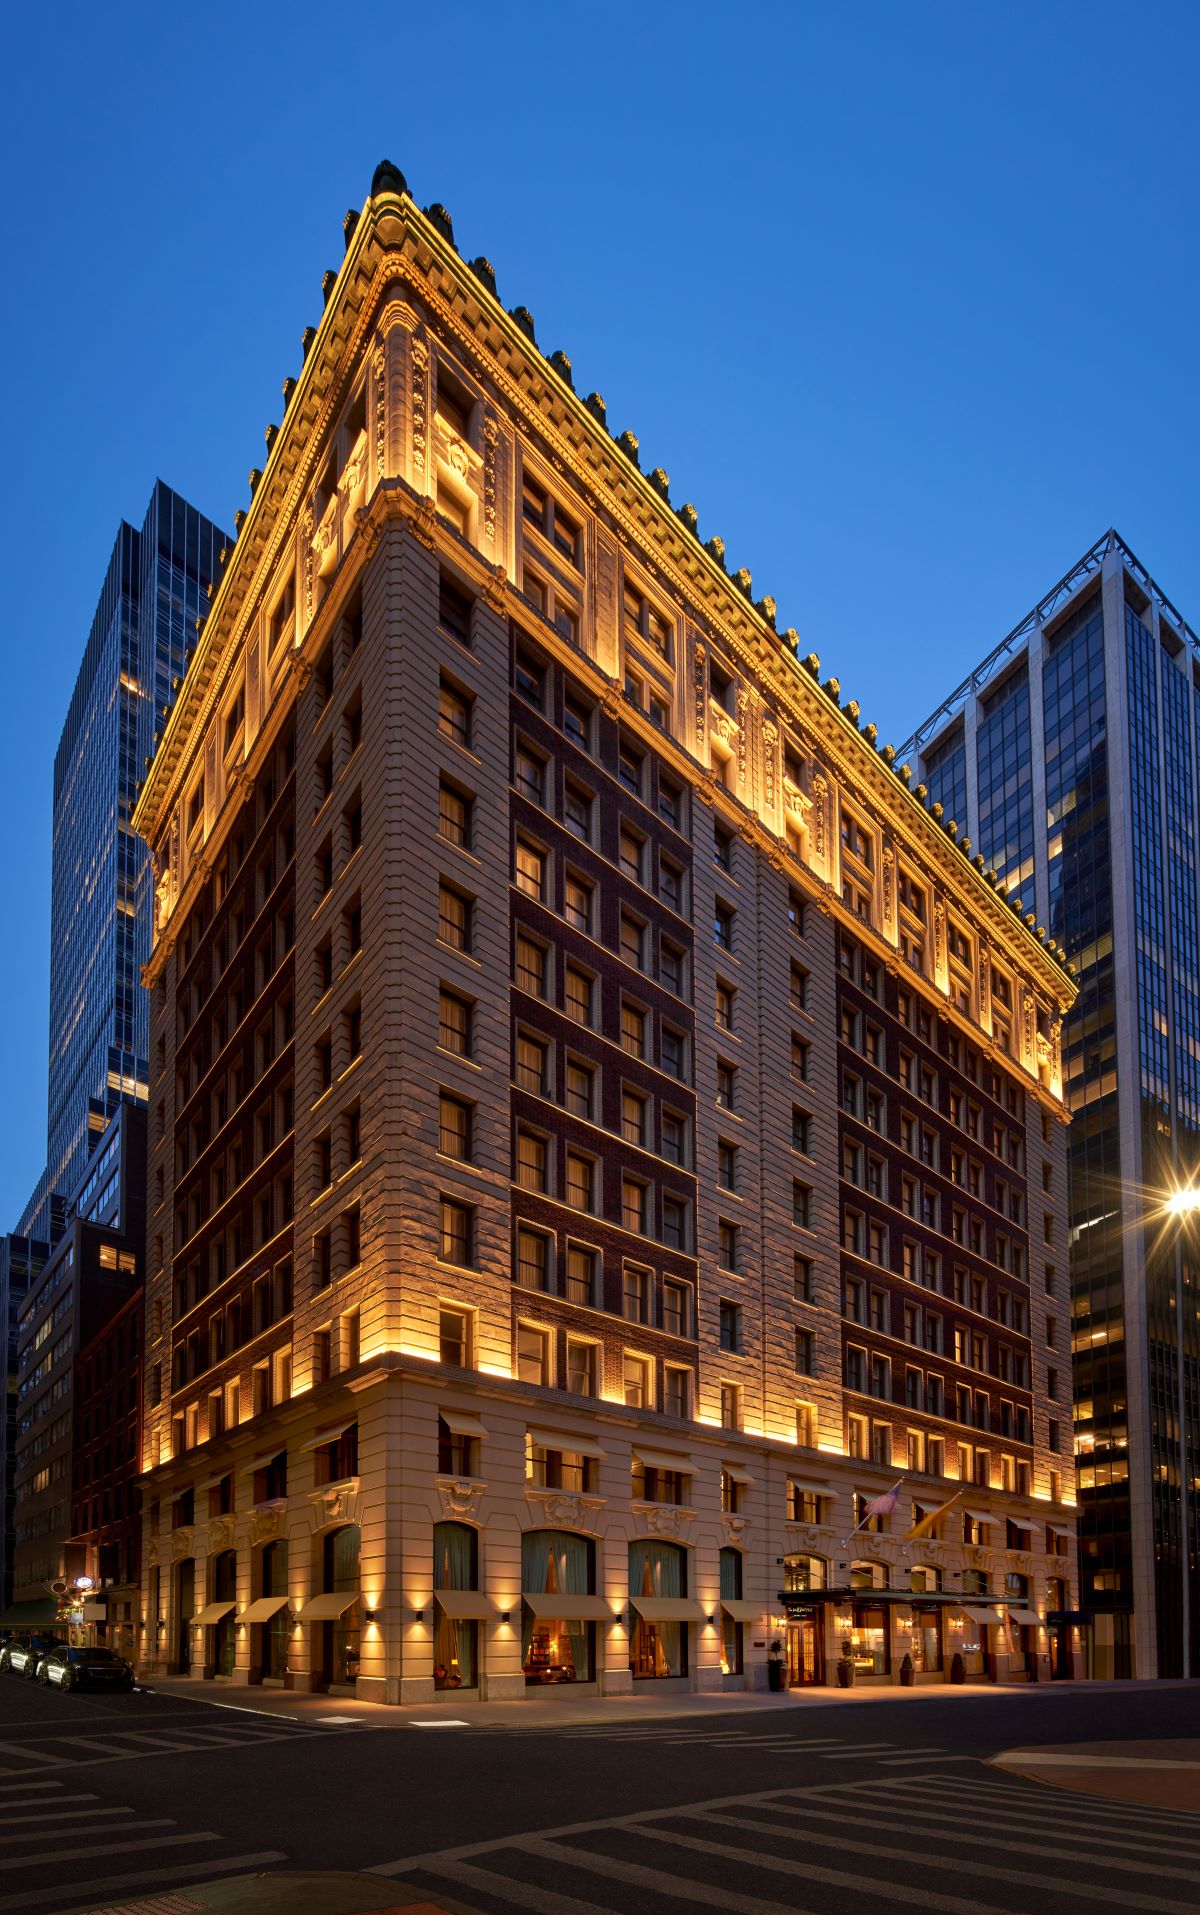 The Wall Street Hotel